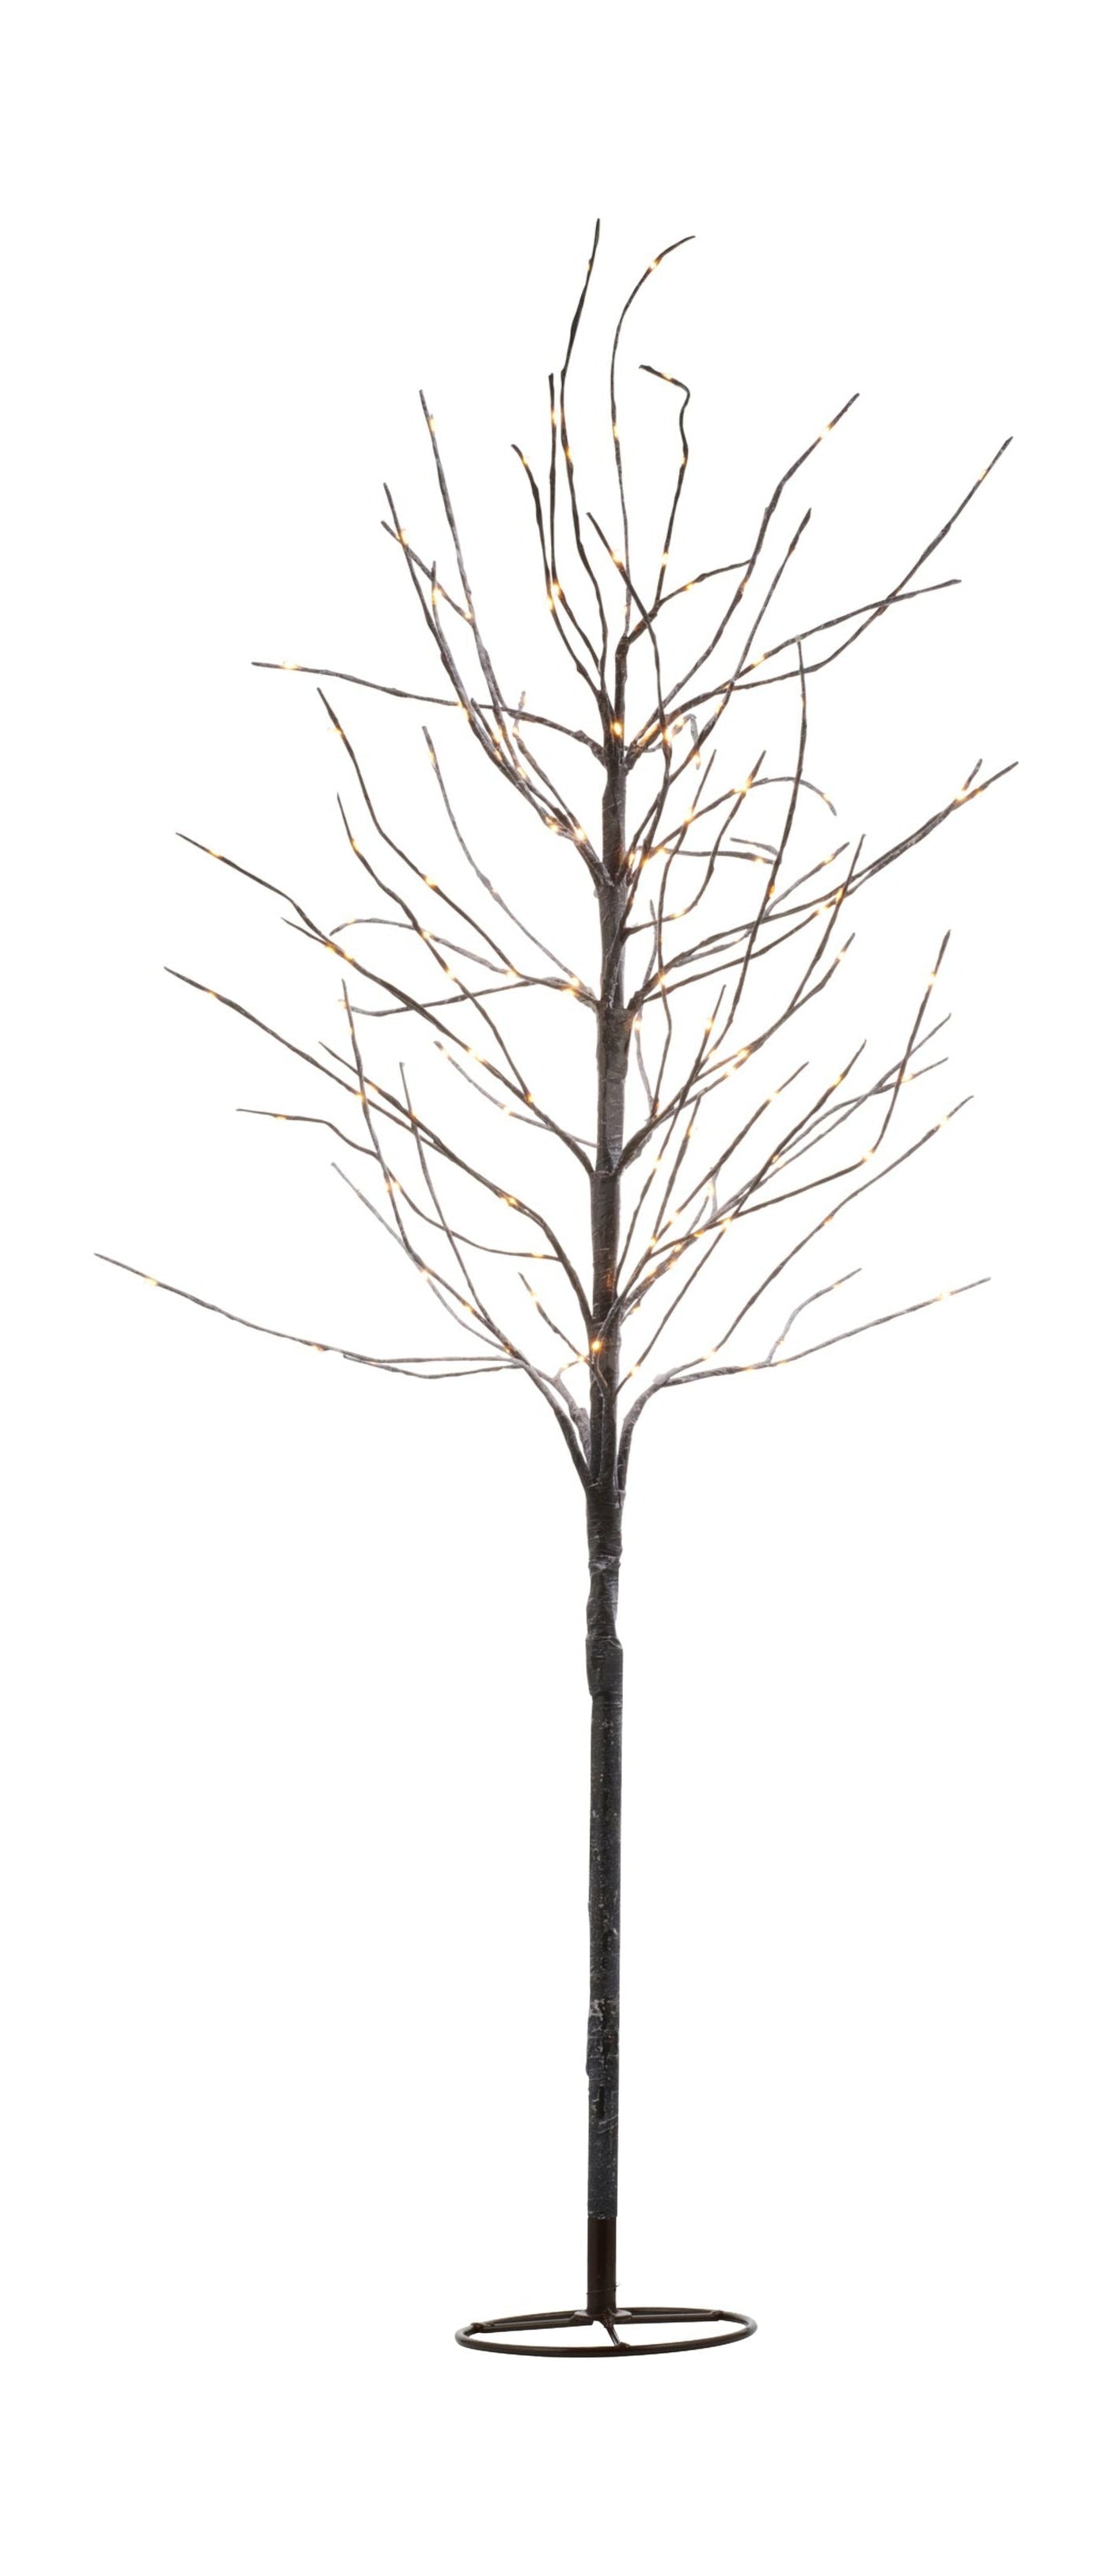 Sirius Kira Tree 280 le ds H1,8m Ø50cm+5m, marrón/nevado